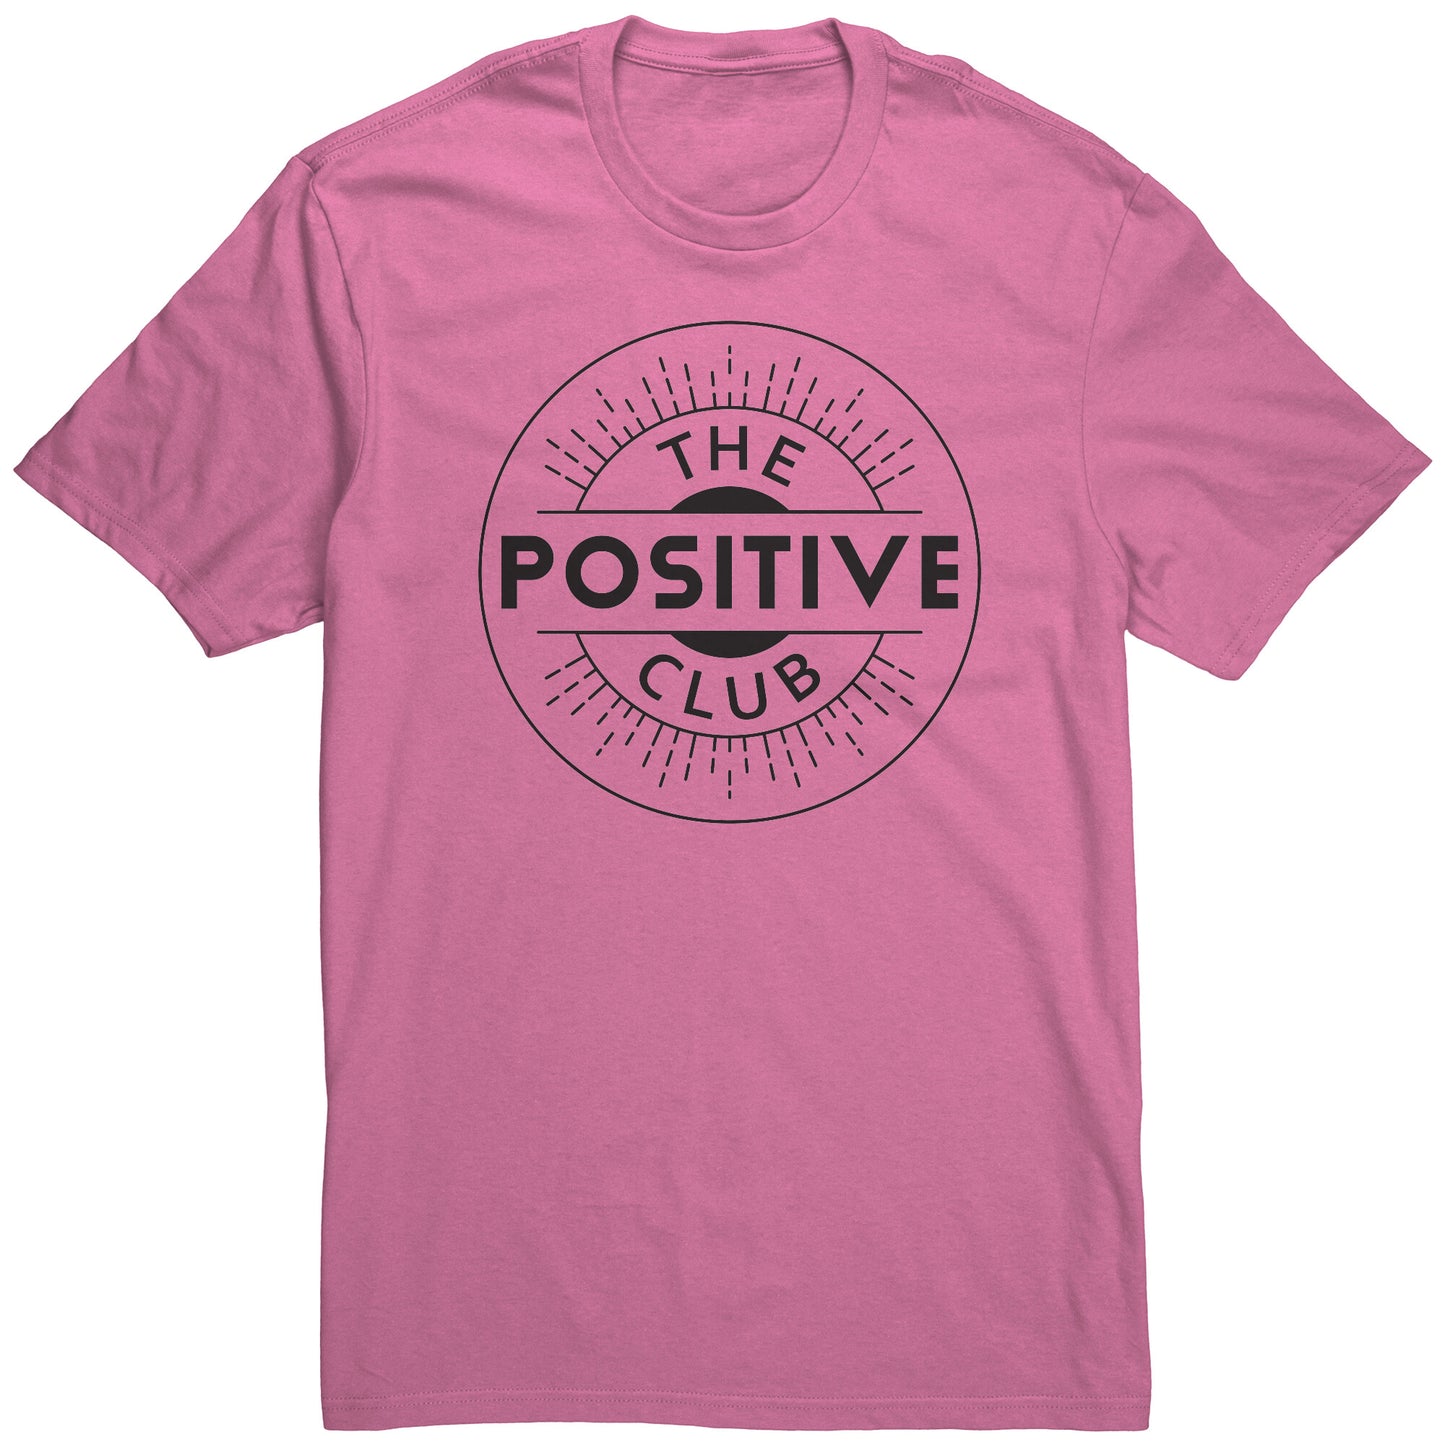 Unisex shirt Black Logo The Positive Club ( Free Shipping )